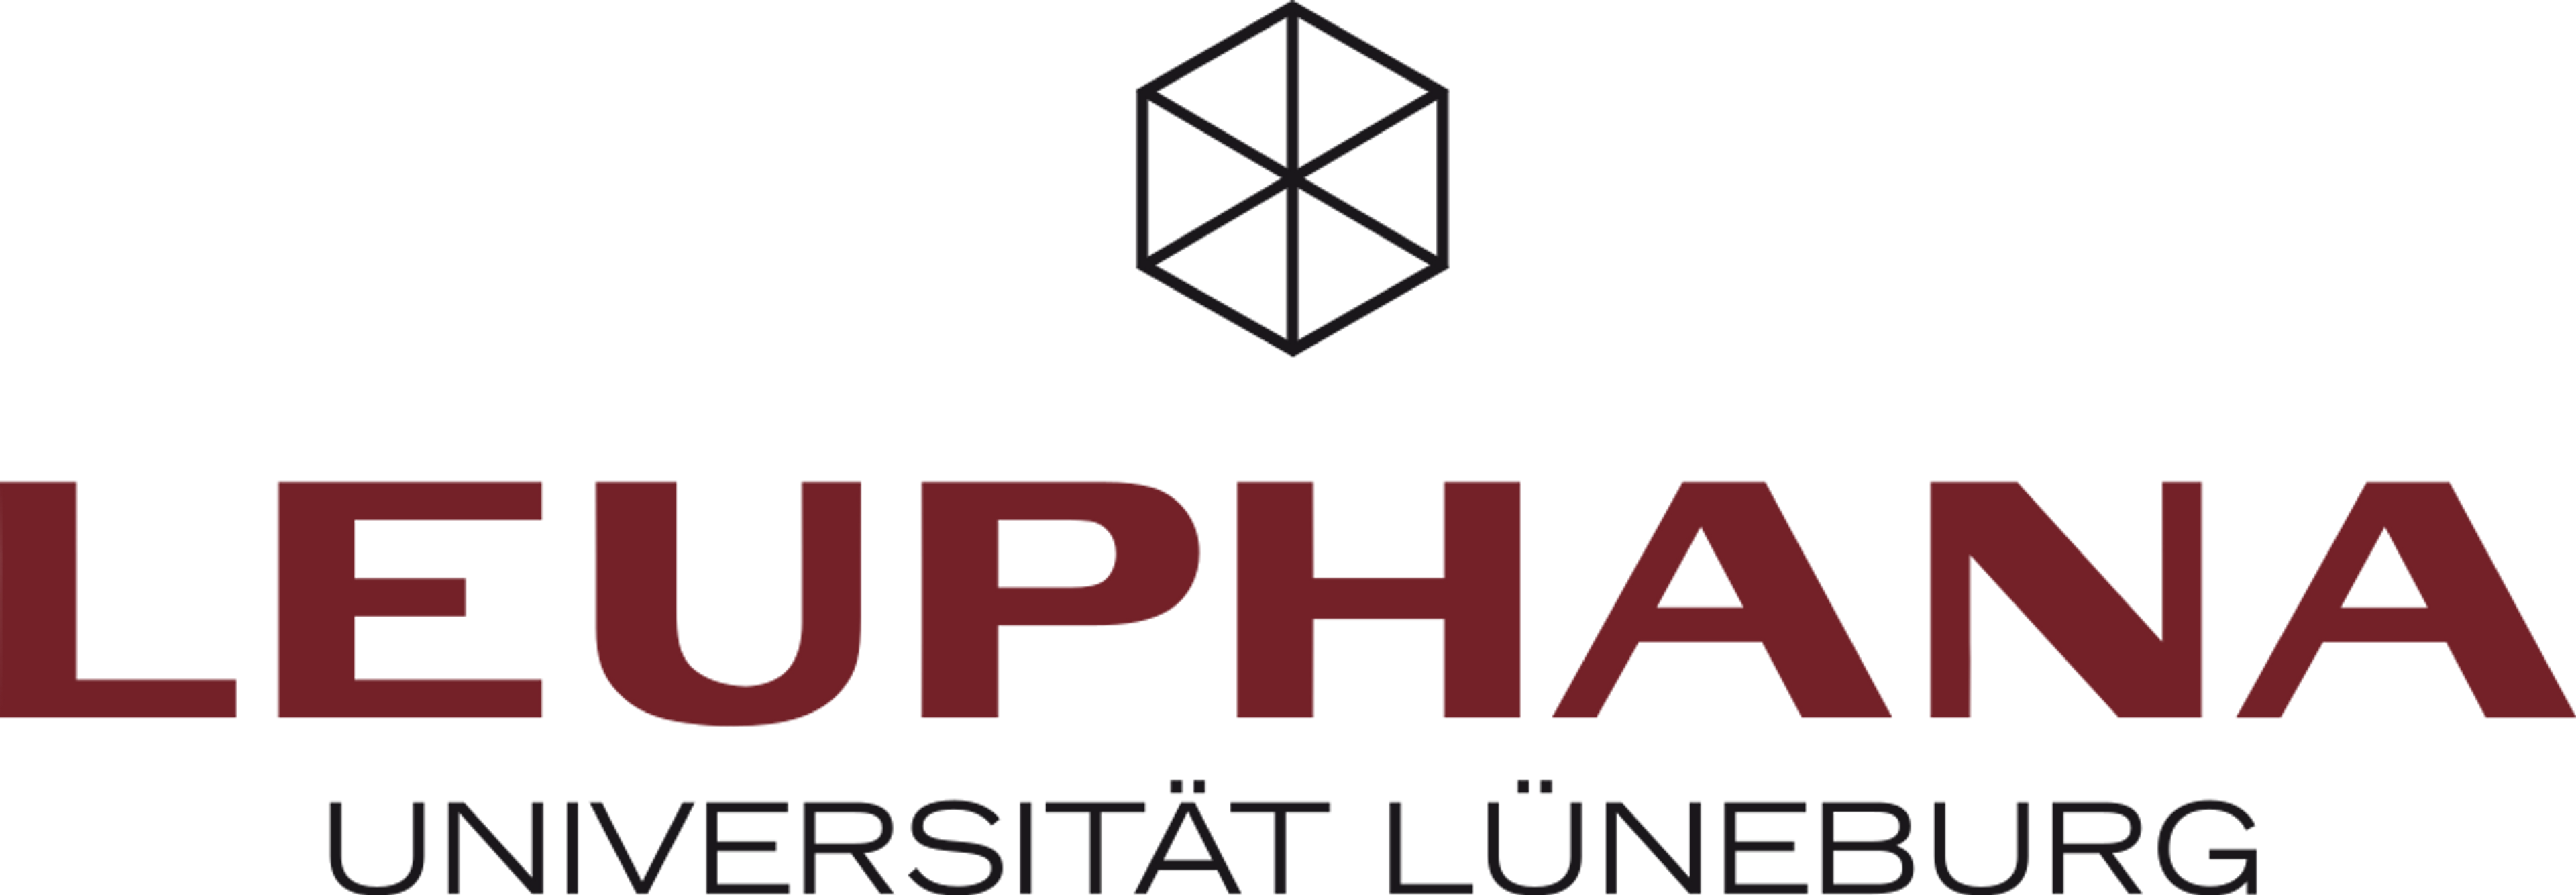 Leuphana University